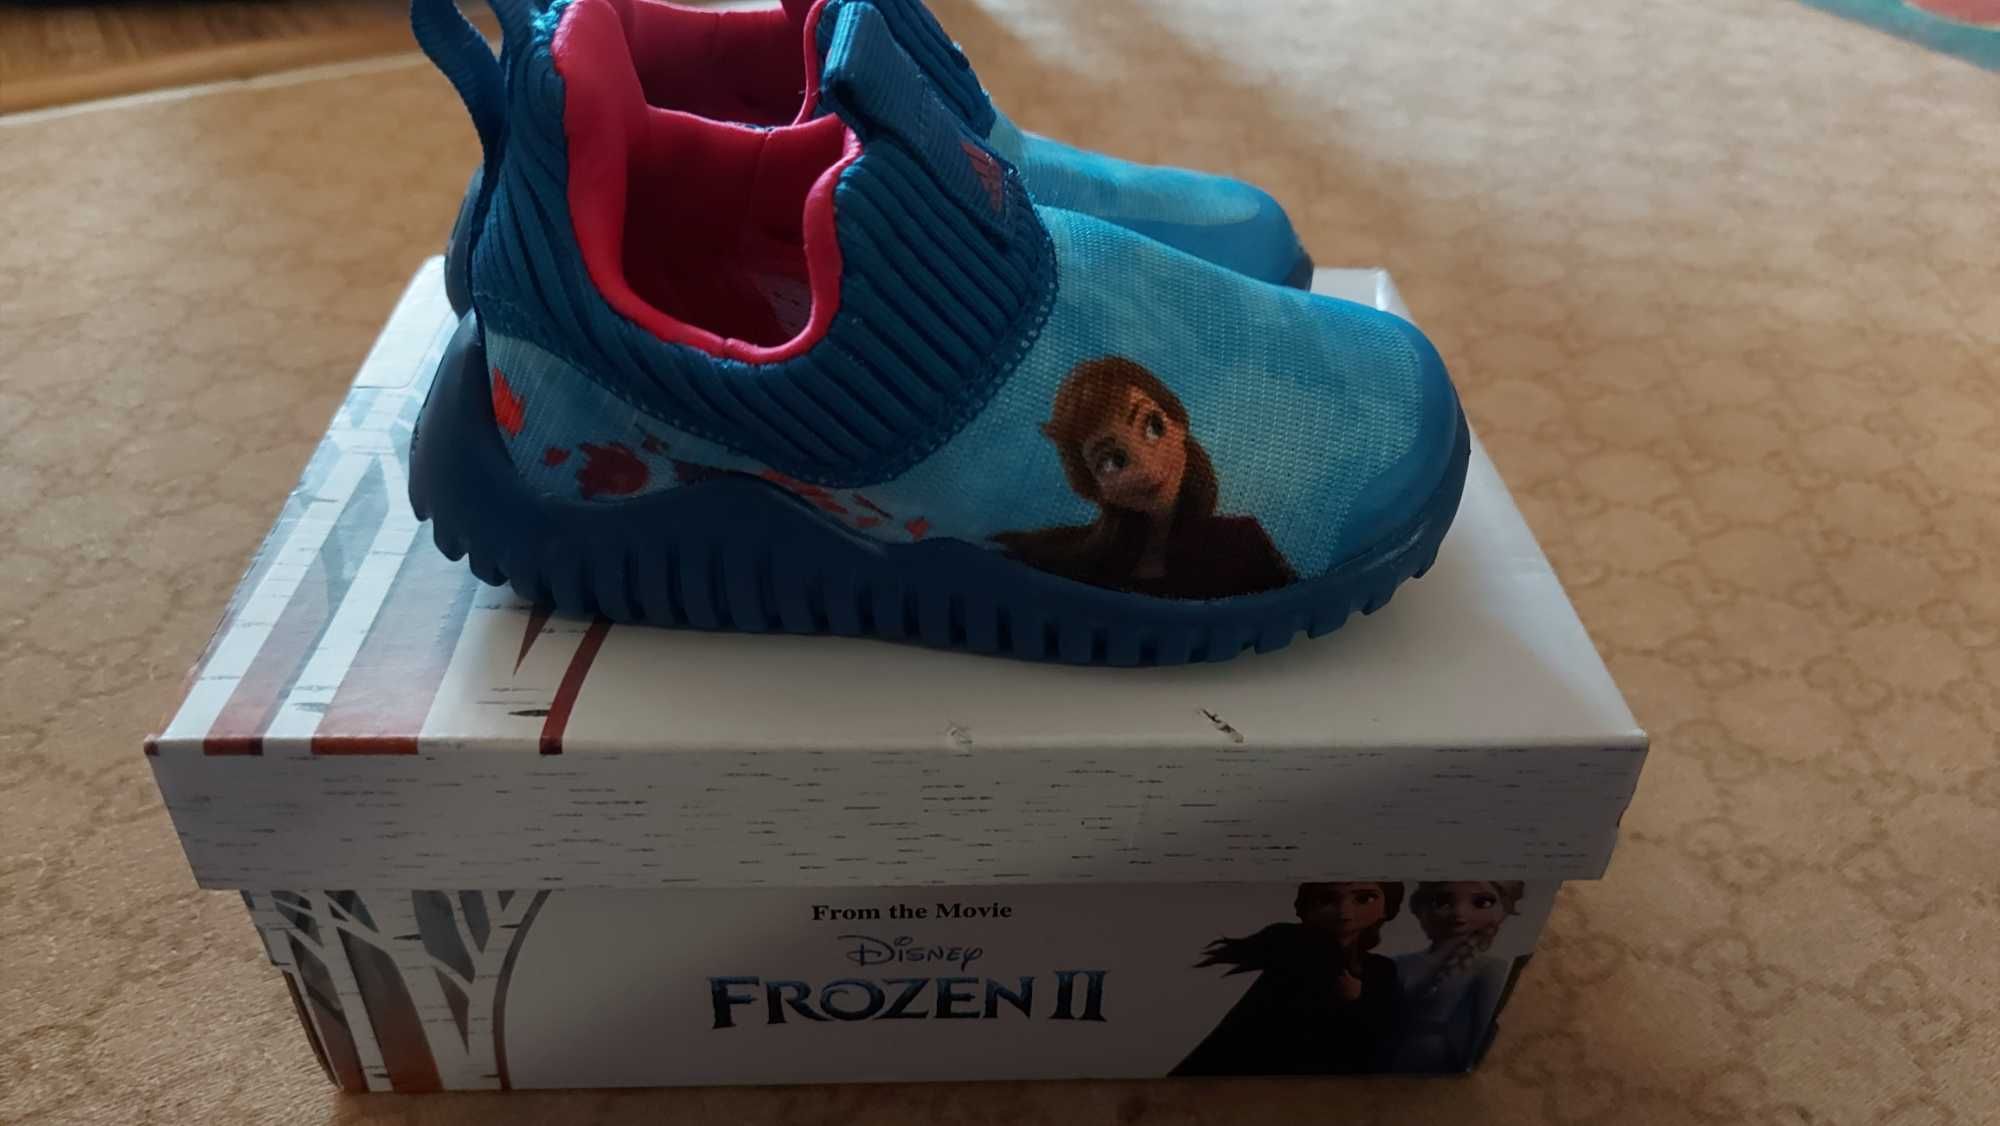 Adidas frozen 23